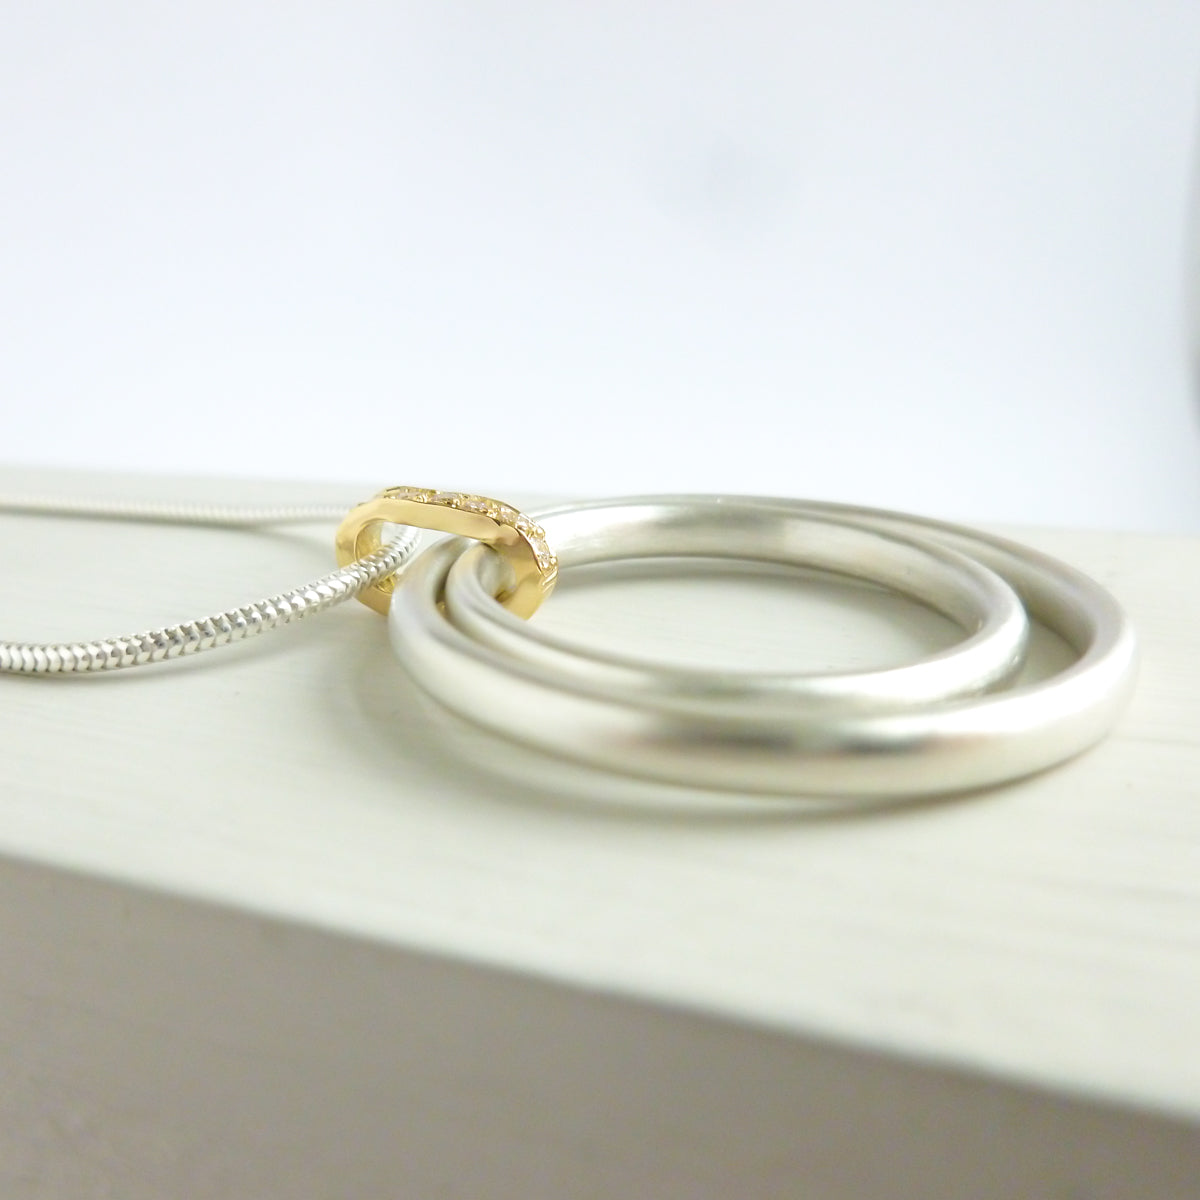 Contemporary Gold, Silver and Diamond Necklace - unique, bespoke by designer jewellery maker Sue Lane.